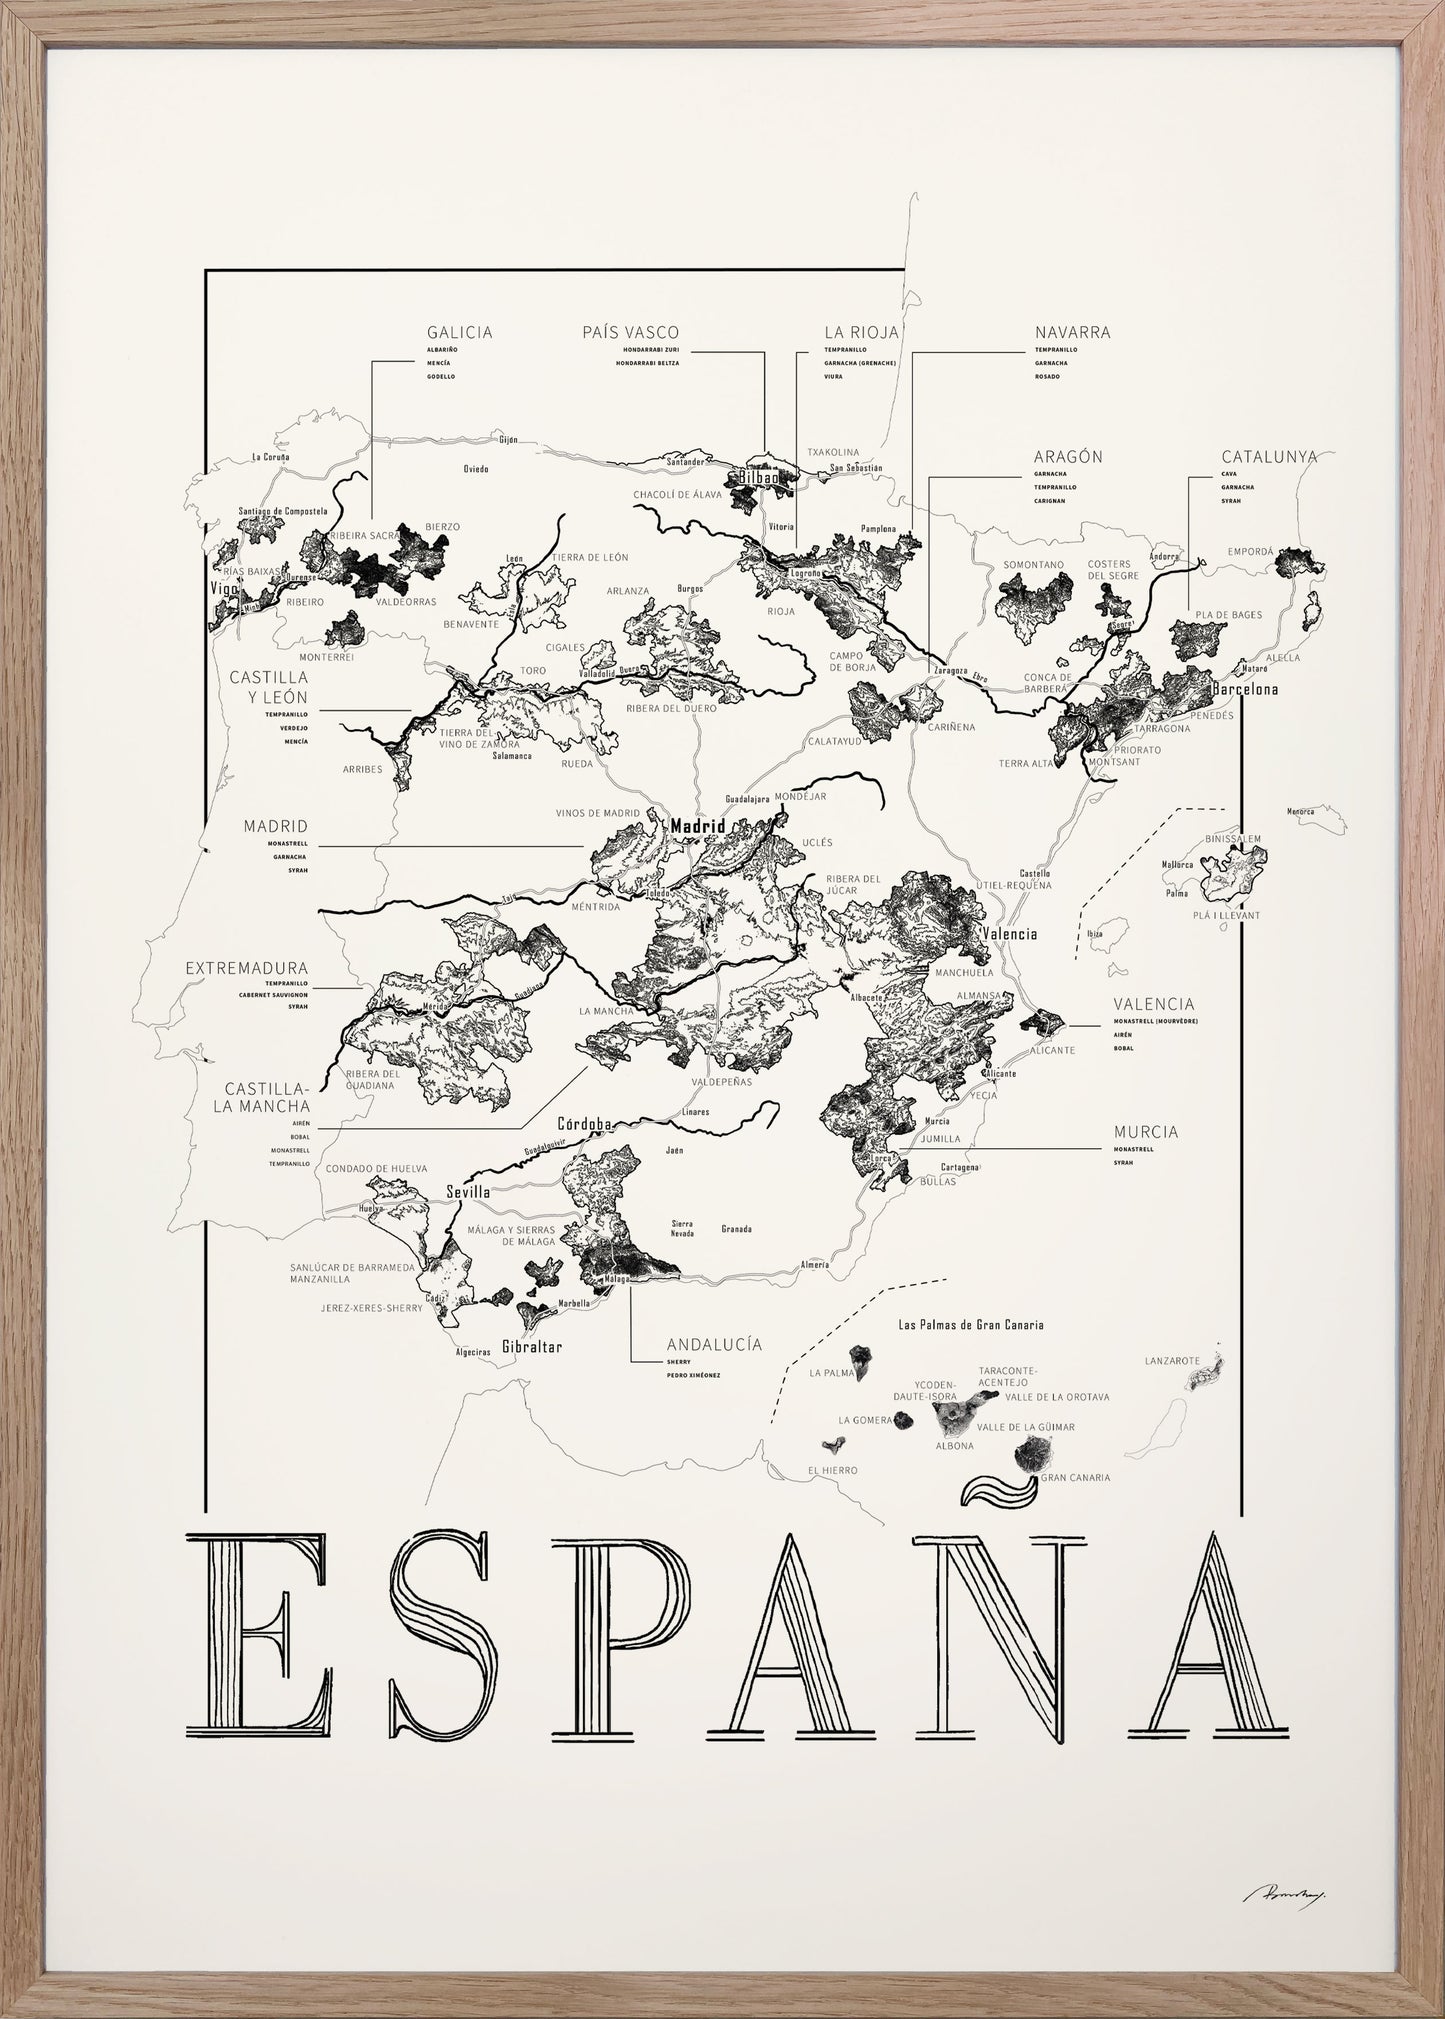 España wine map